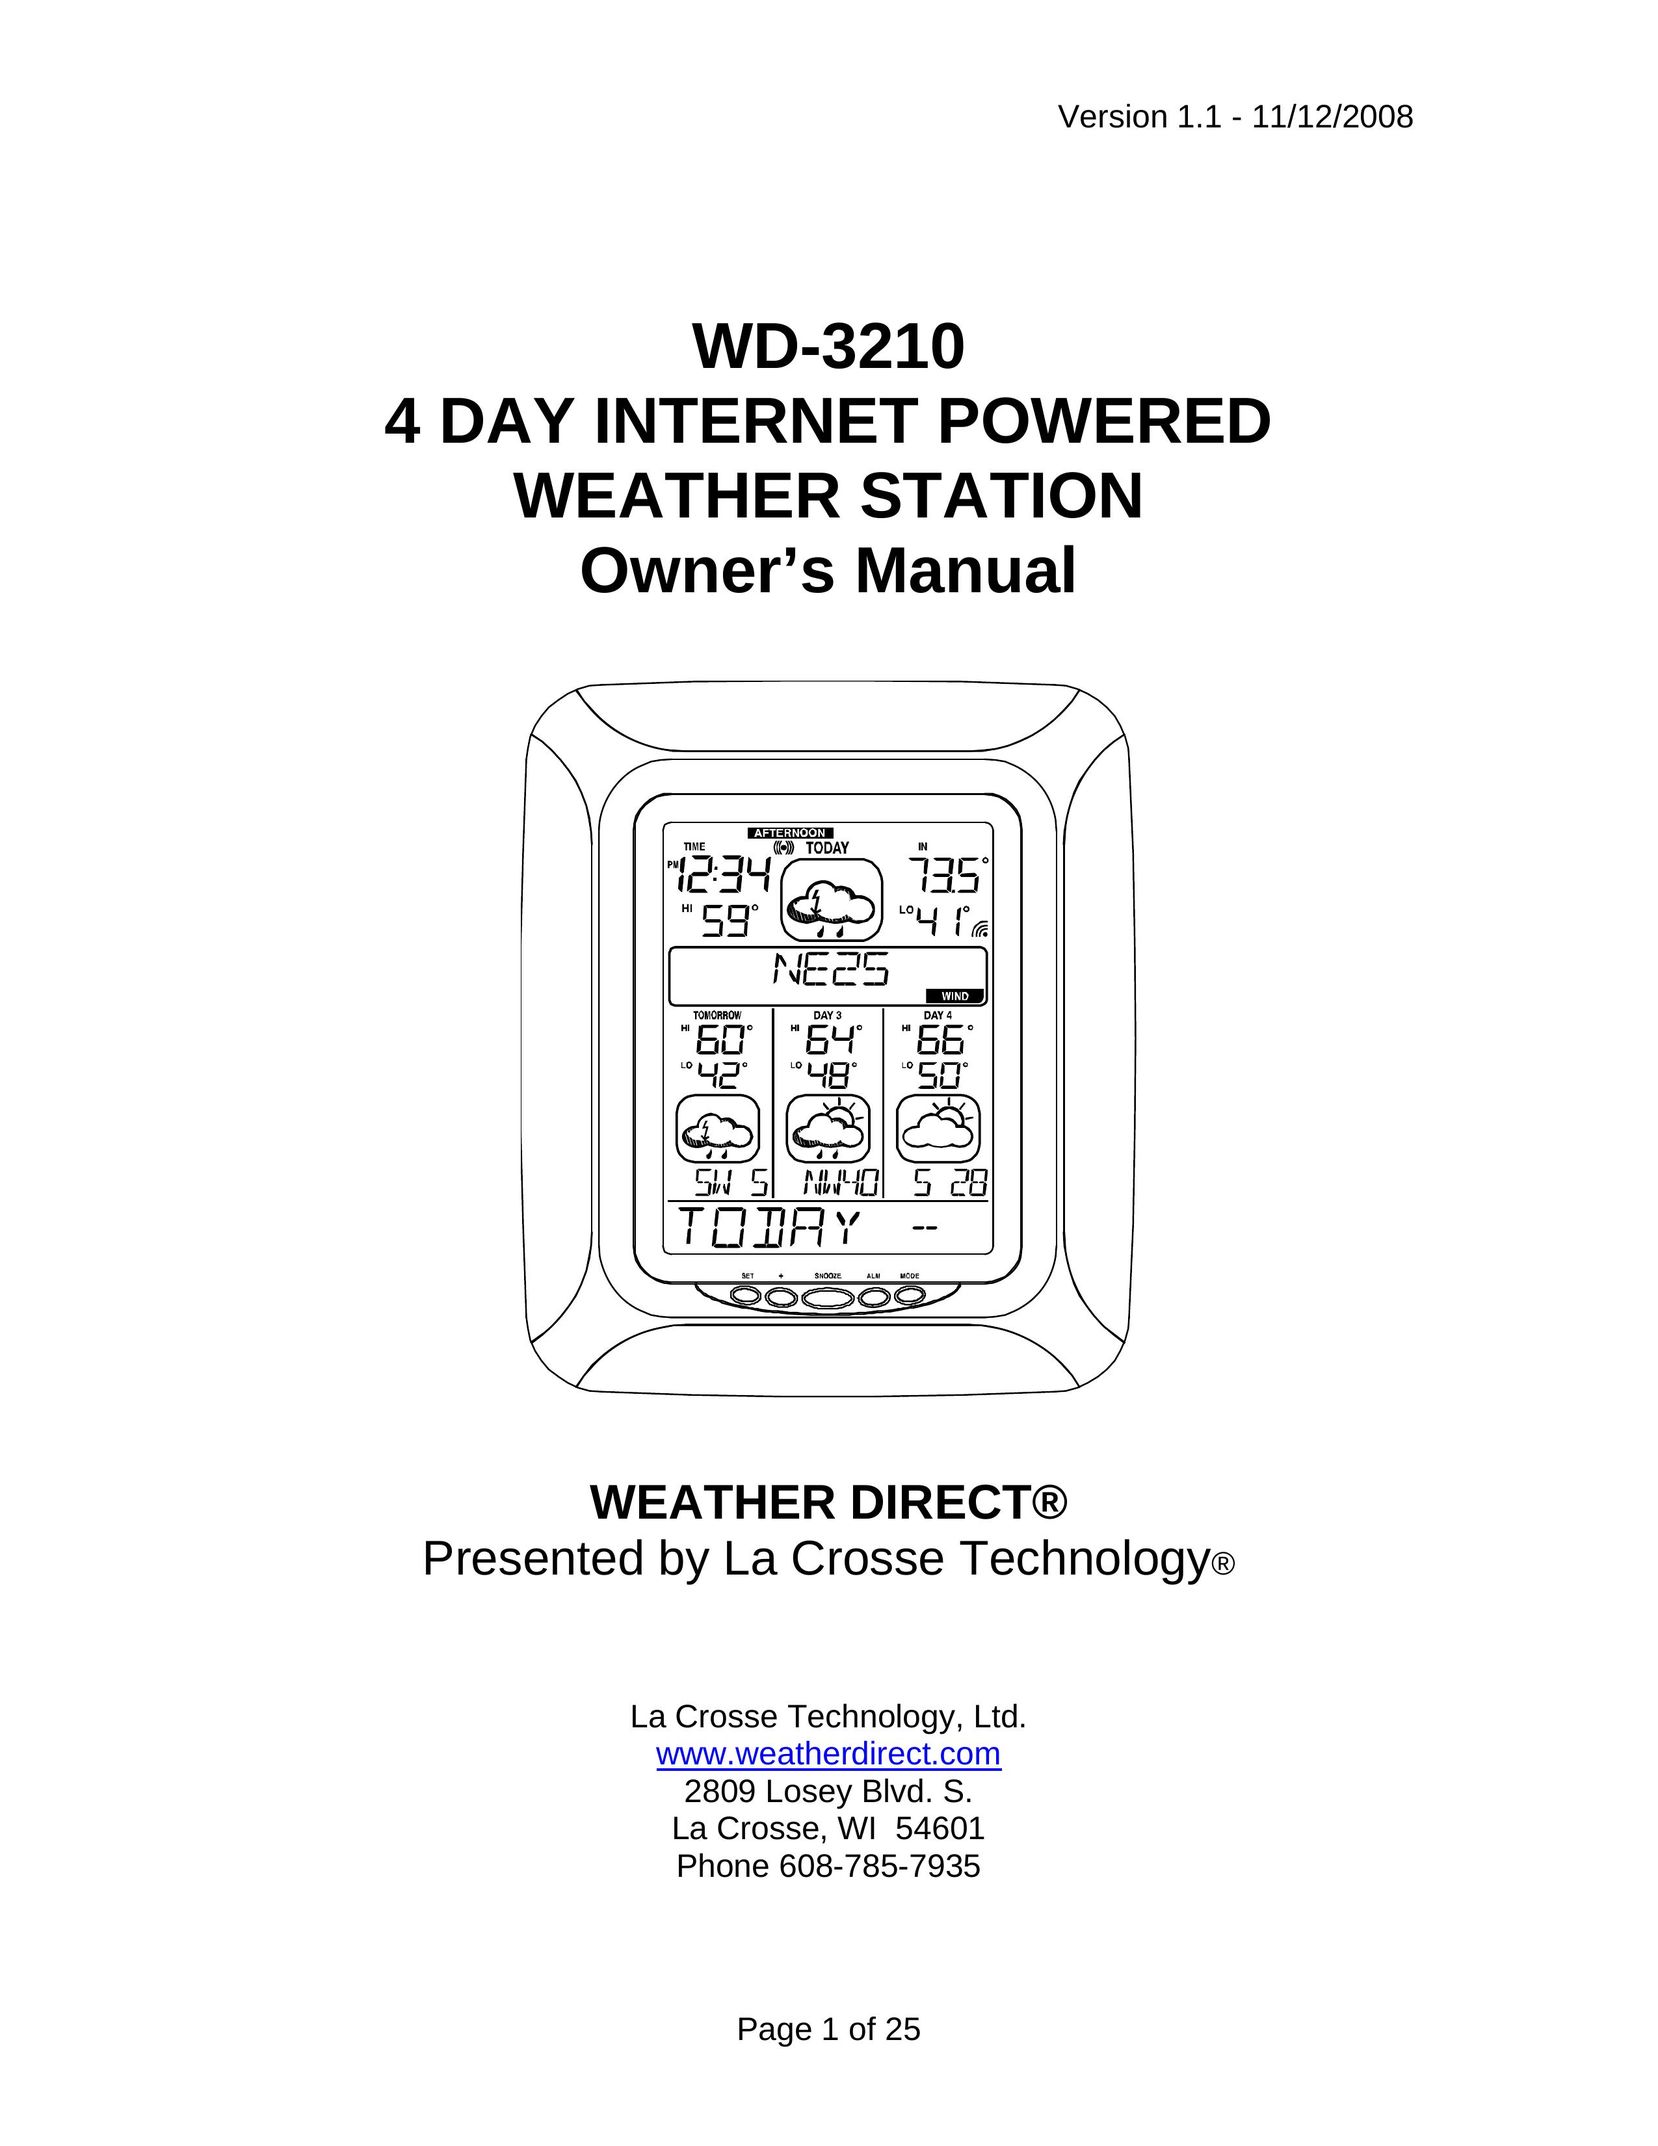 La Crosse Technology WD-3210 Portable Radio User Manual